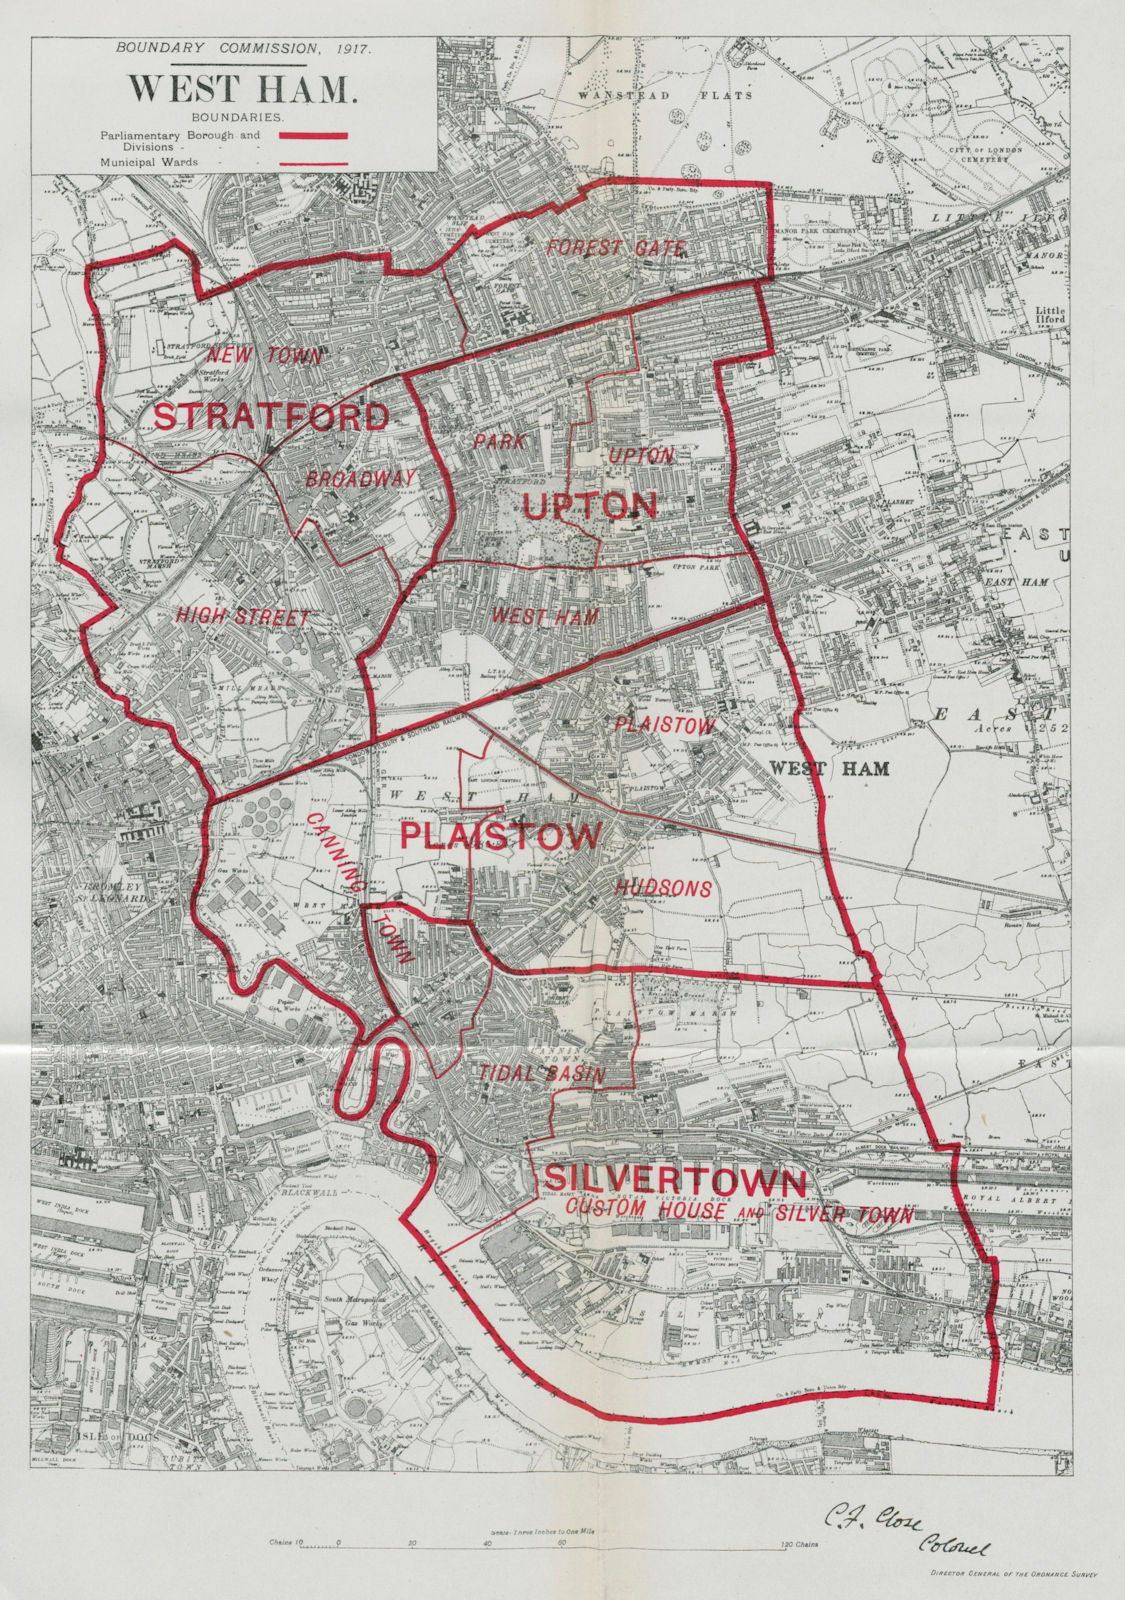 West Ham Parliamentary Borough. Stratford upton BOUNDARY COMMISSION 1917 map